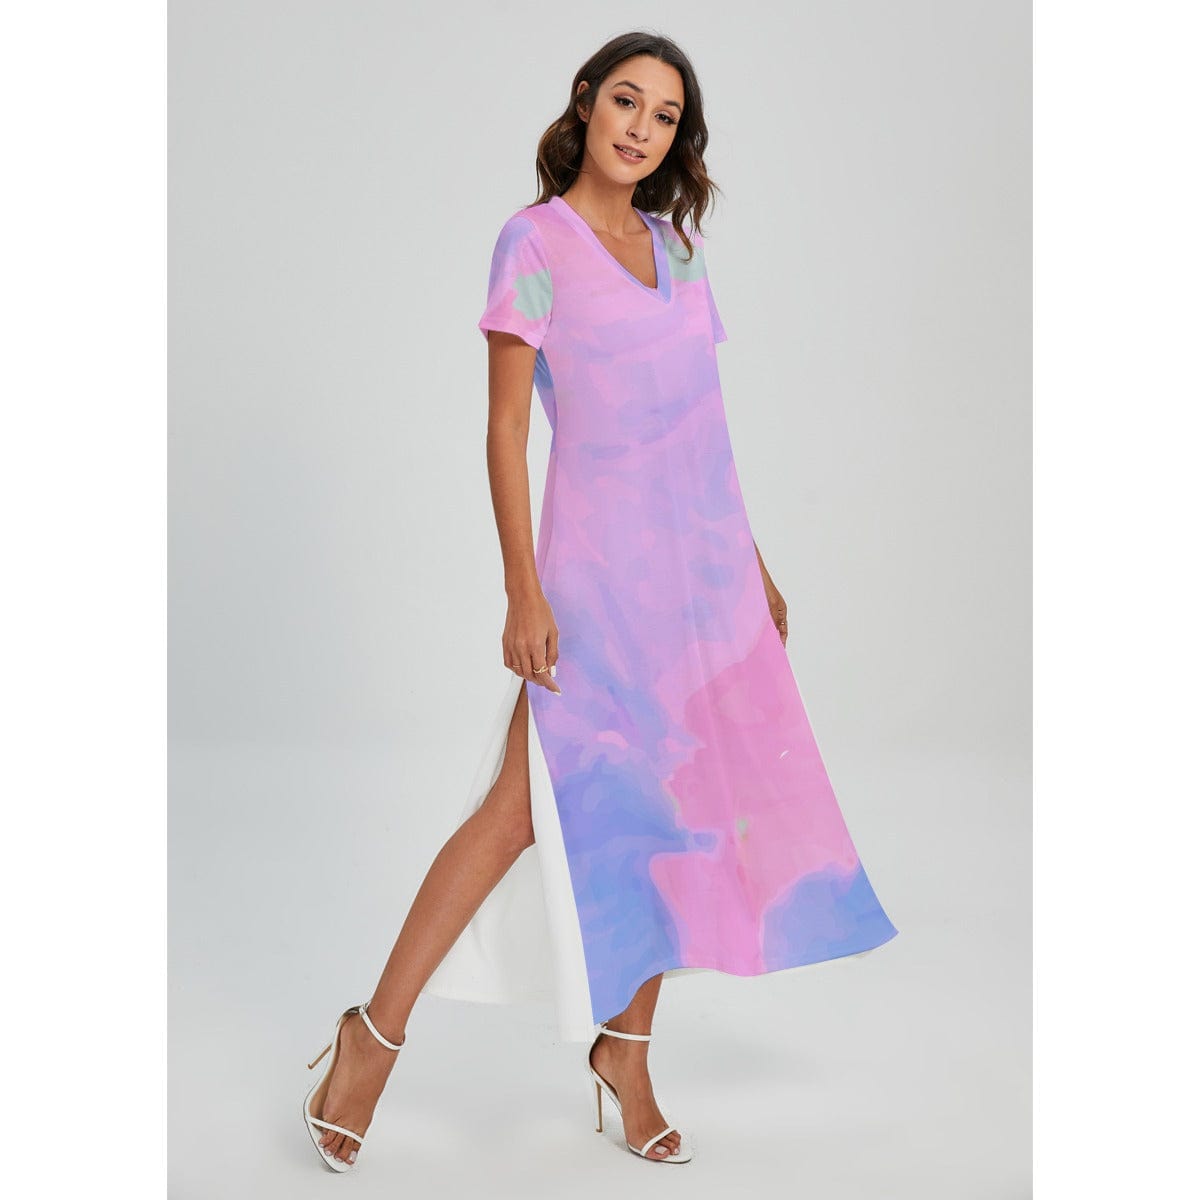 Yoycol Dresses All-Over Print Women's V-neck Dress With Side Slit